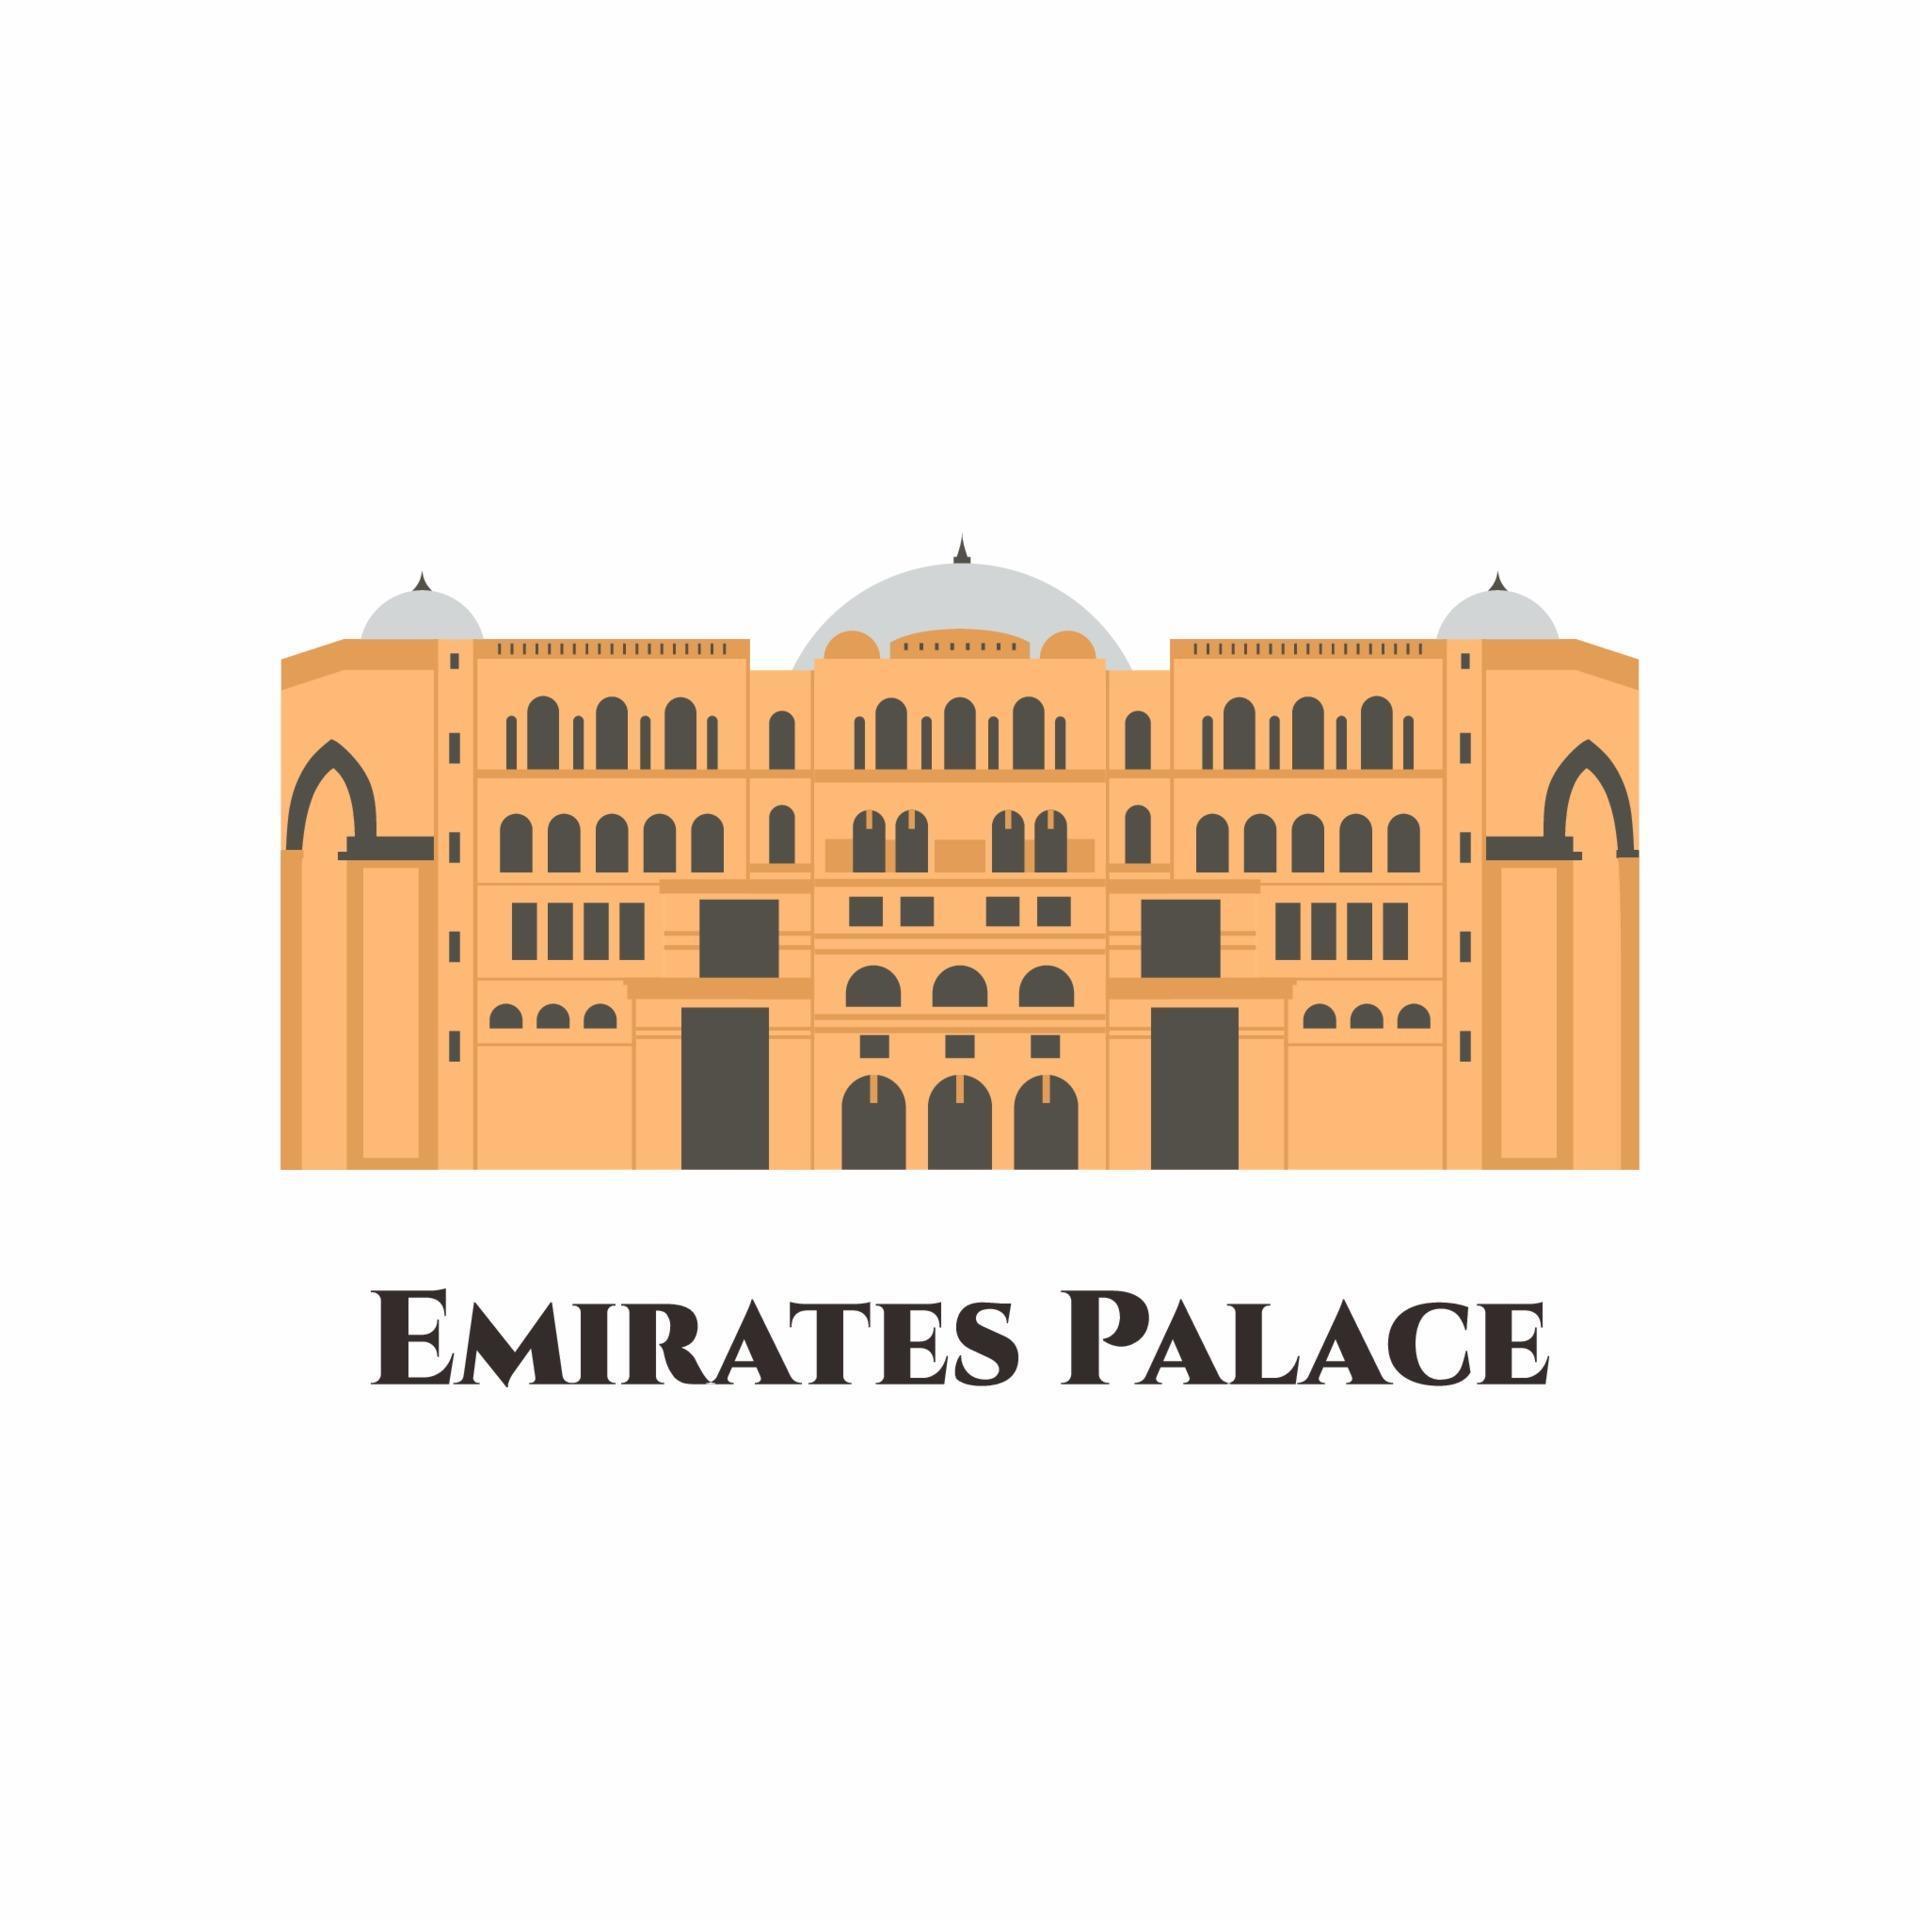 Emirates Palace in Abu Dhabi, United Arab Emirates. It is the perfect